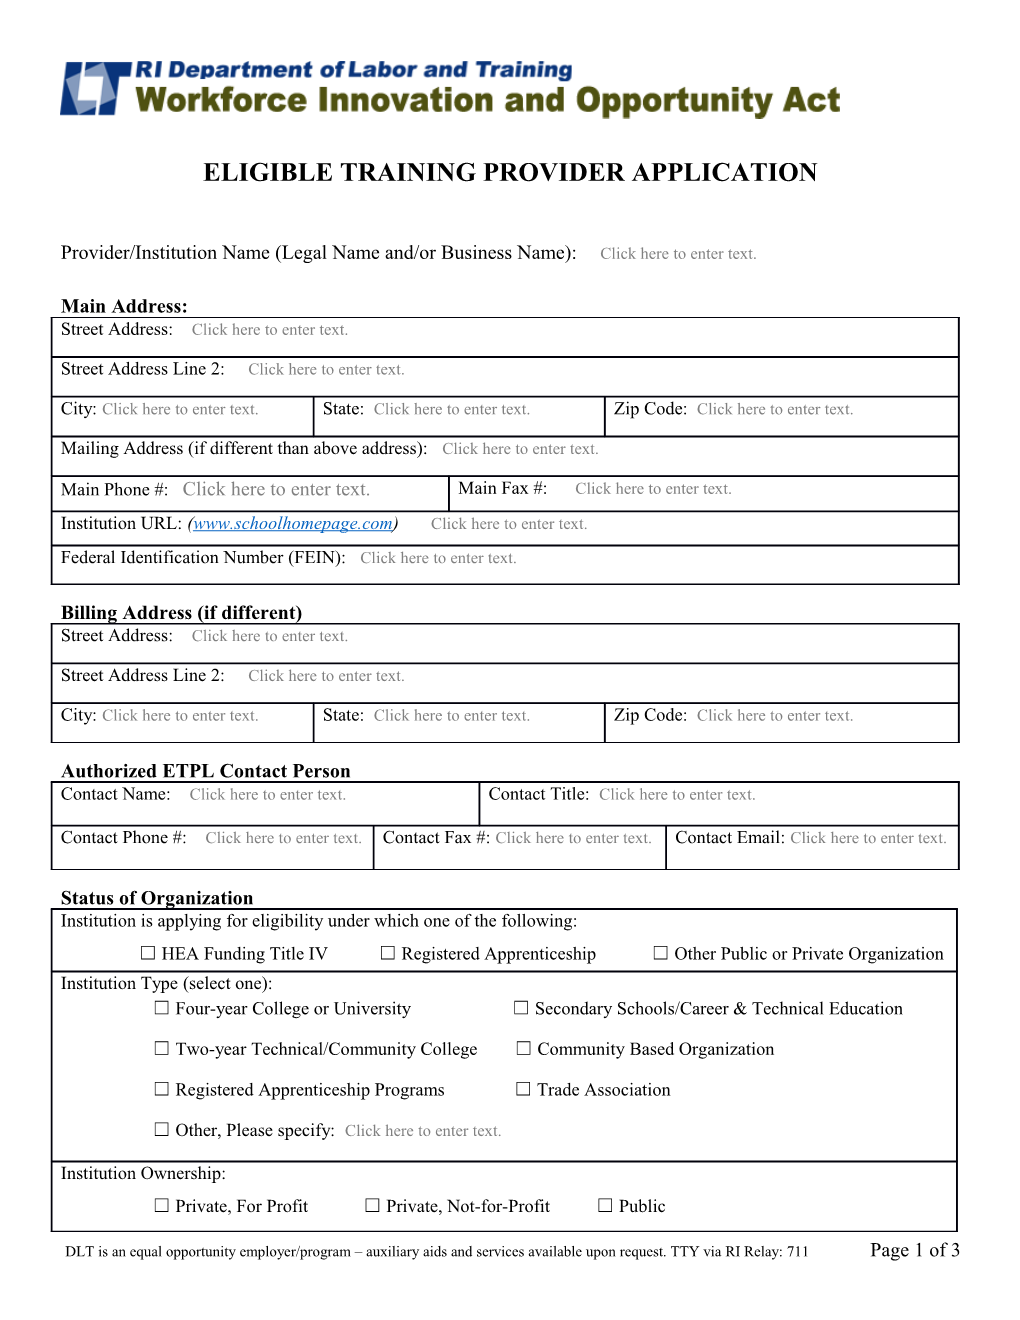 Eligible Training Provider Application